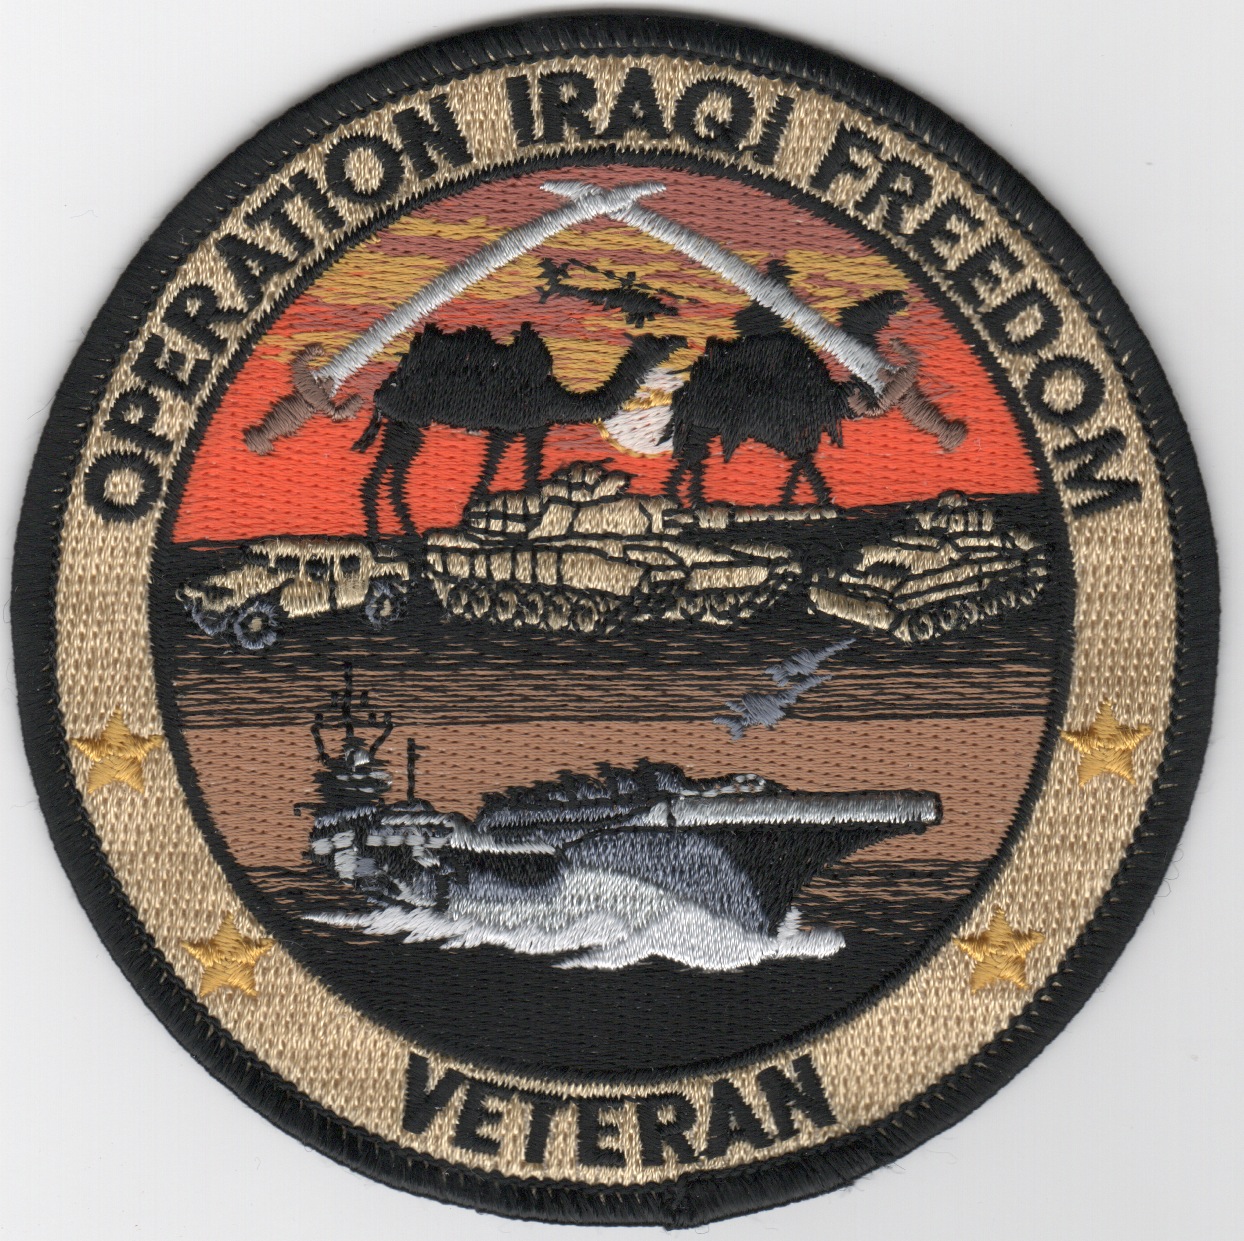 Operation IRAQI FREEDOM (Army/CVN/Round)